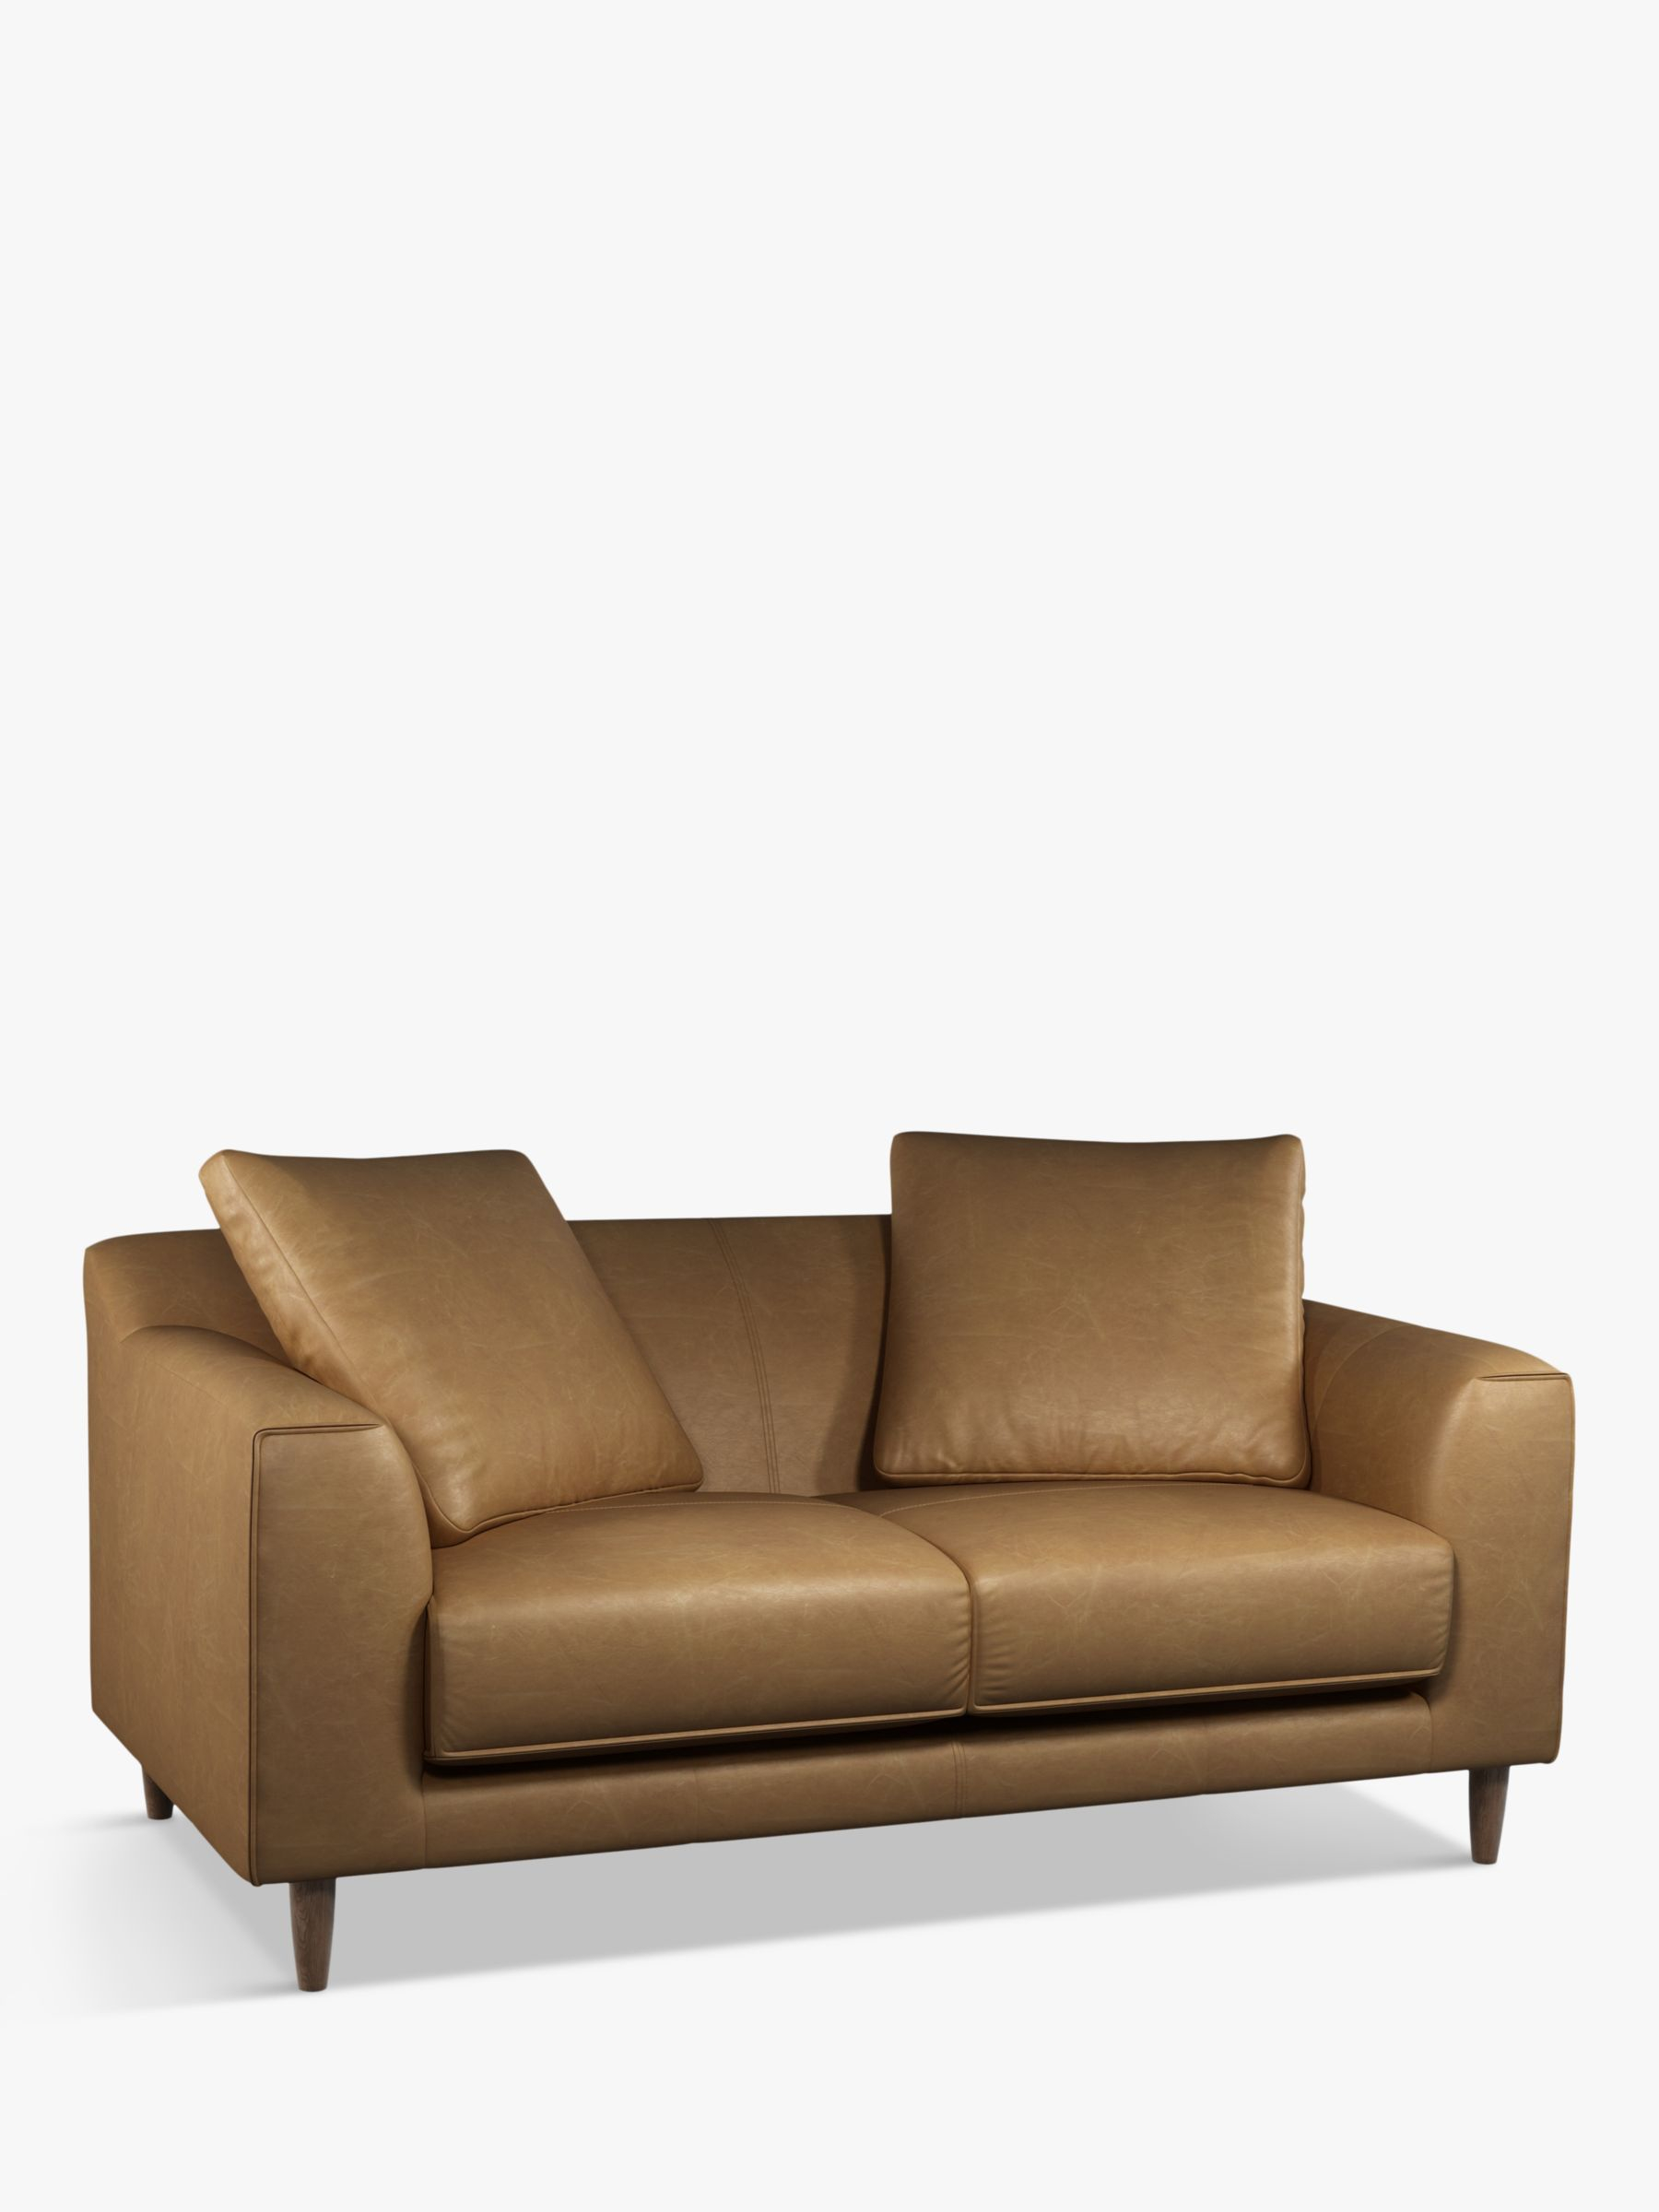 John Lewis Partners Billow Medium 2 Seater Leather Sofa pertaining to size 1800 X 2400